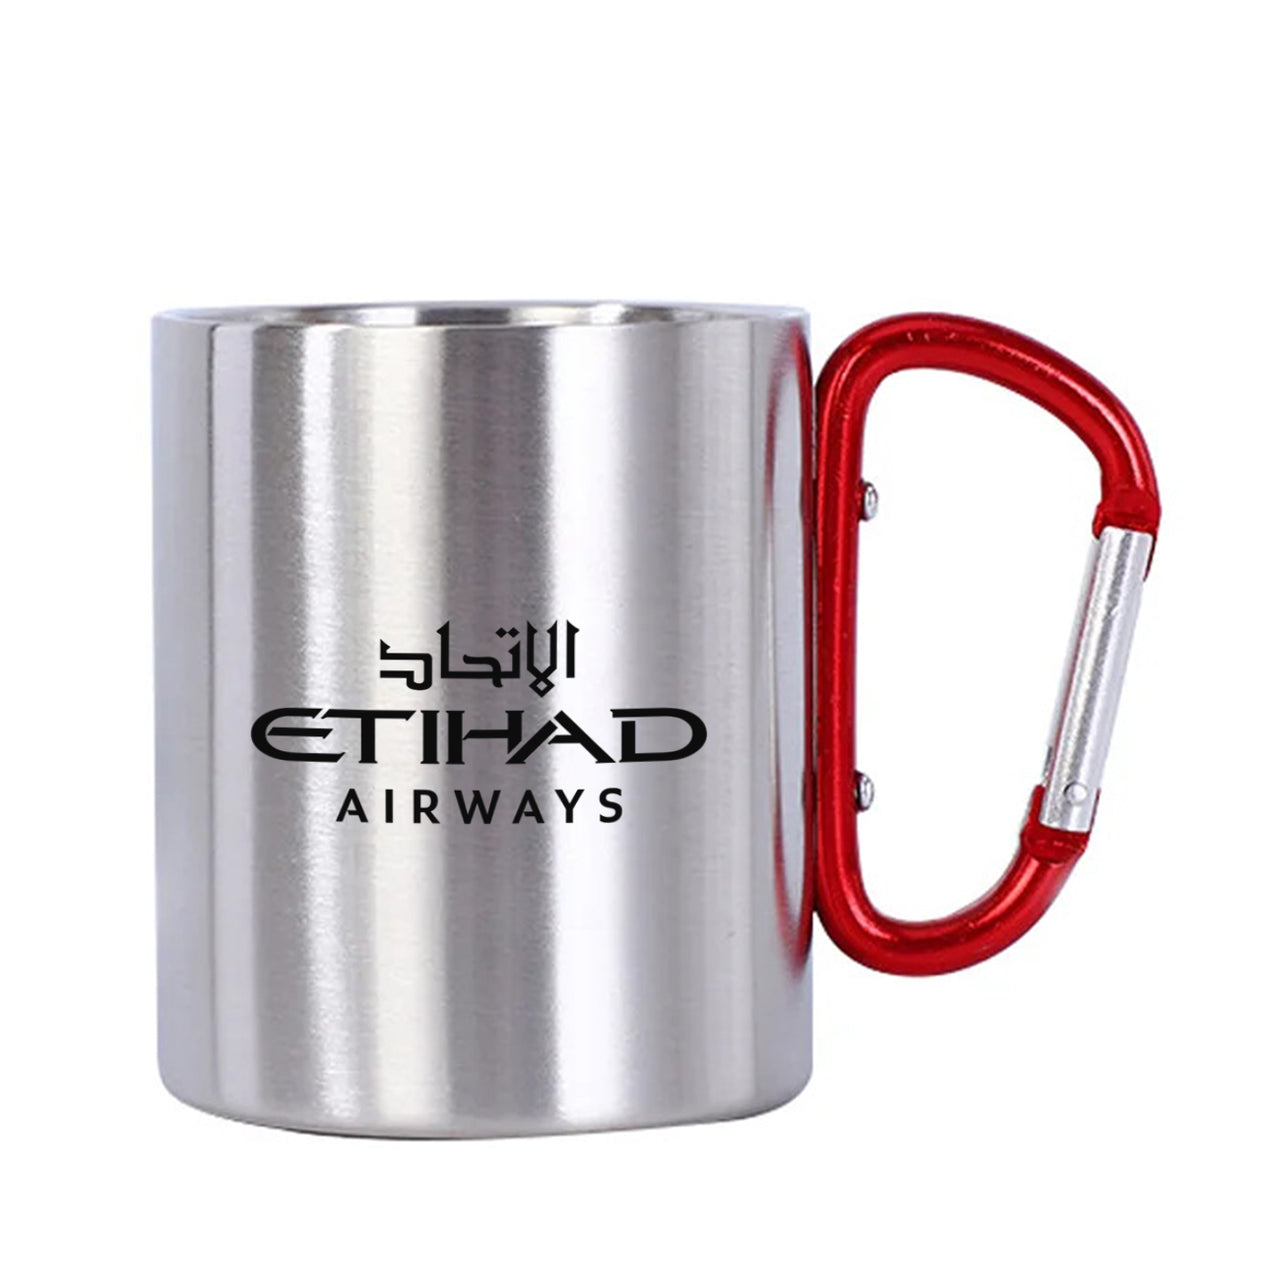 Etihad Airways Airlines Designed Stainless Steel Outdoors Mugs